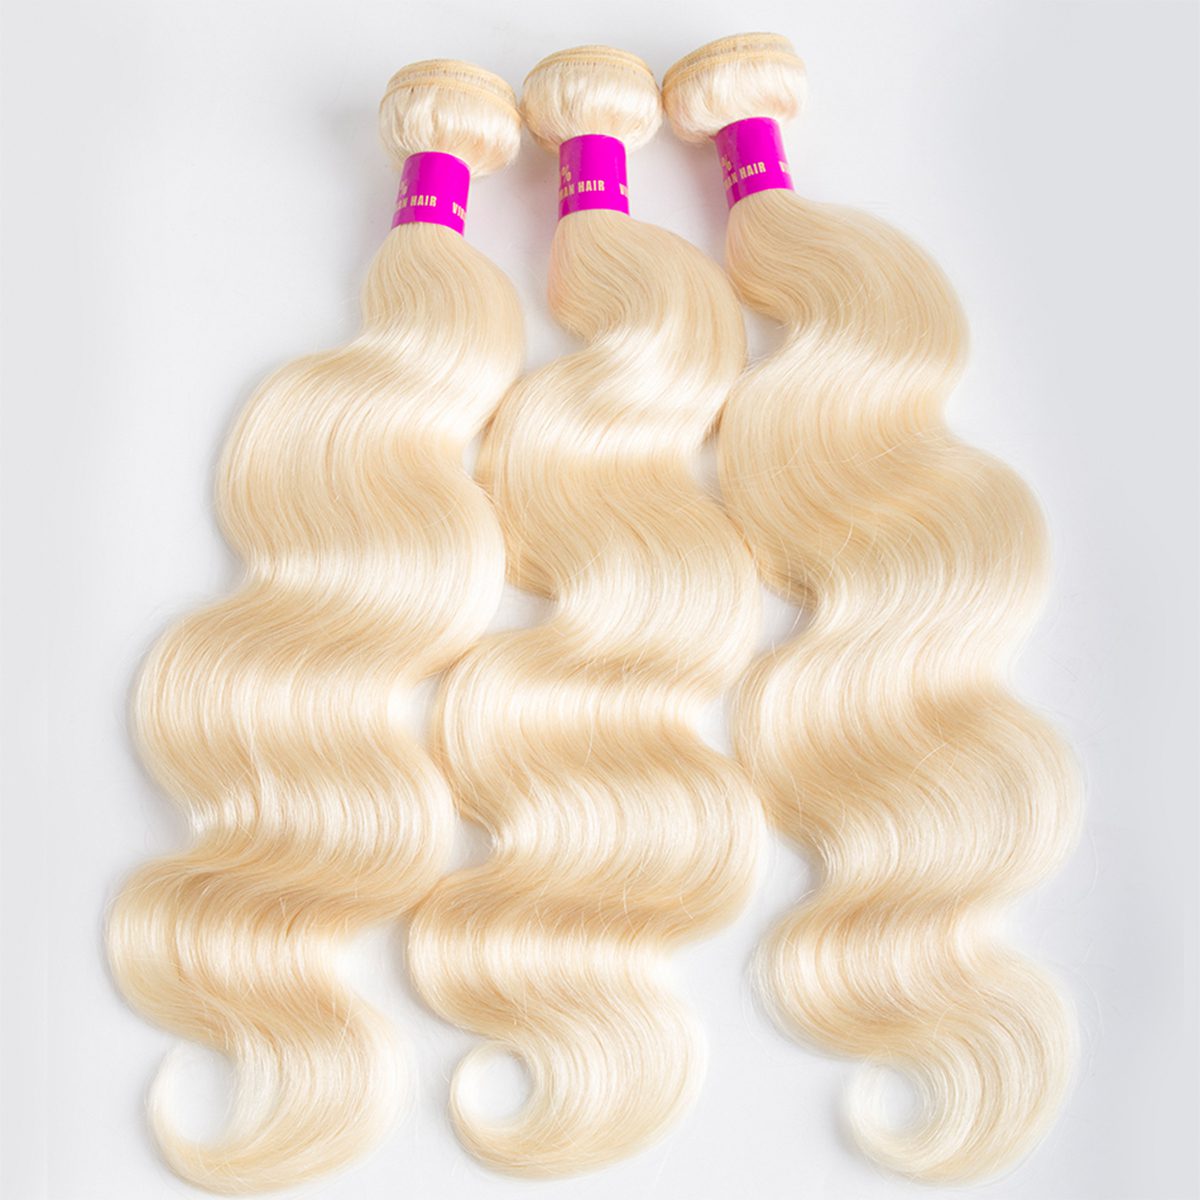 613 Blonde Body Wave 3 Bundles Brazilian Virgin Hair Extensions